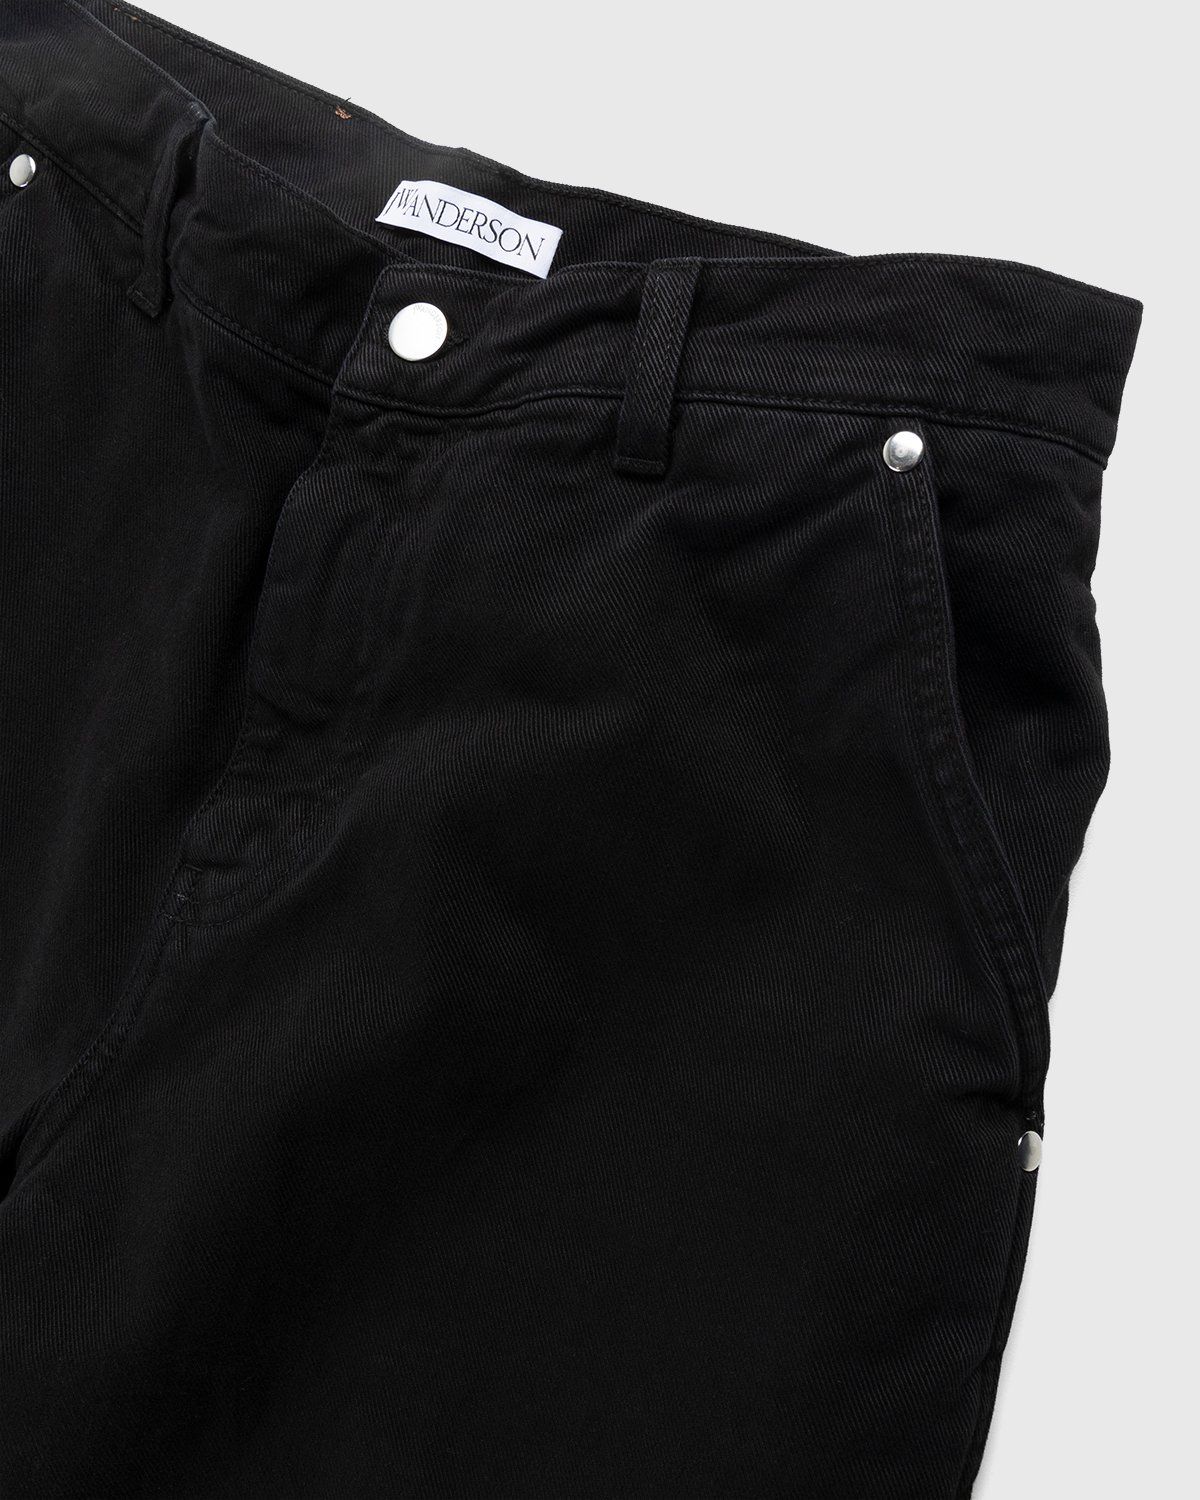 J.W. Anderson – Logo Grid Cuff Wide Leg Jeans Black - Denim - Black - Image 4